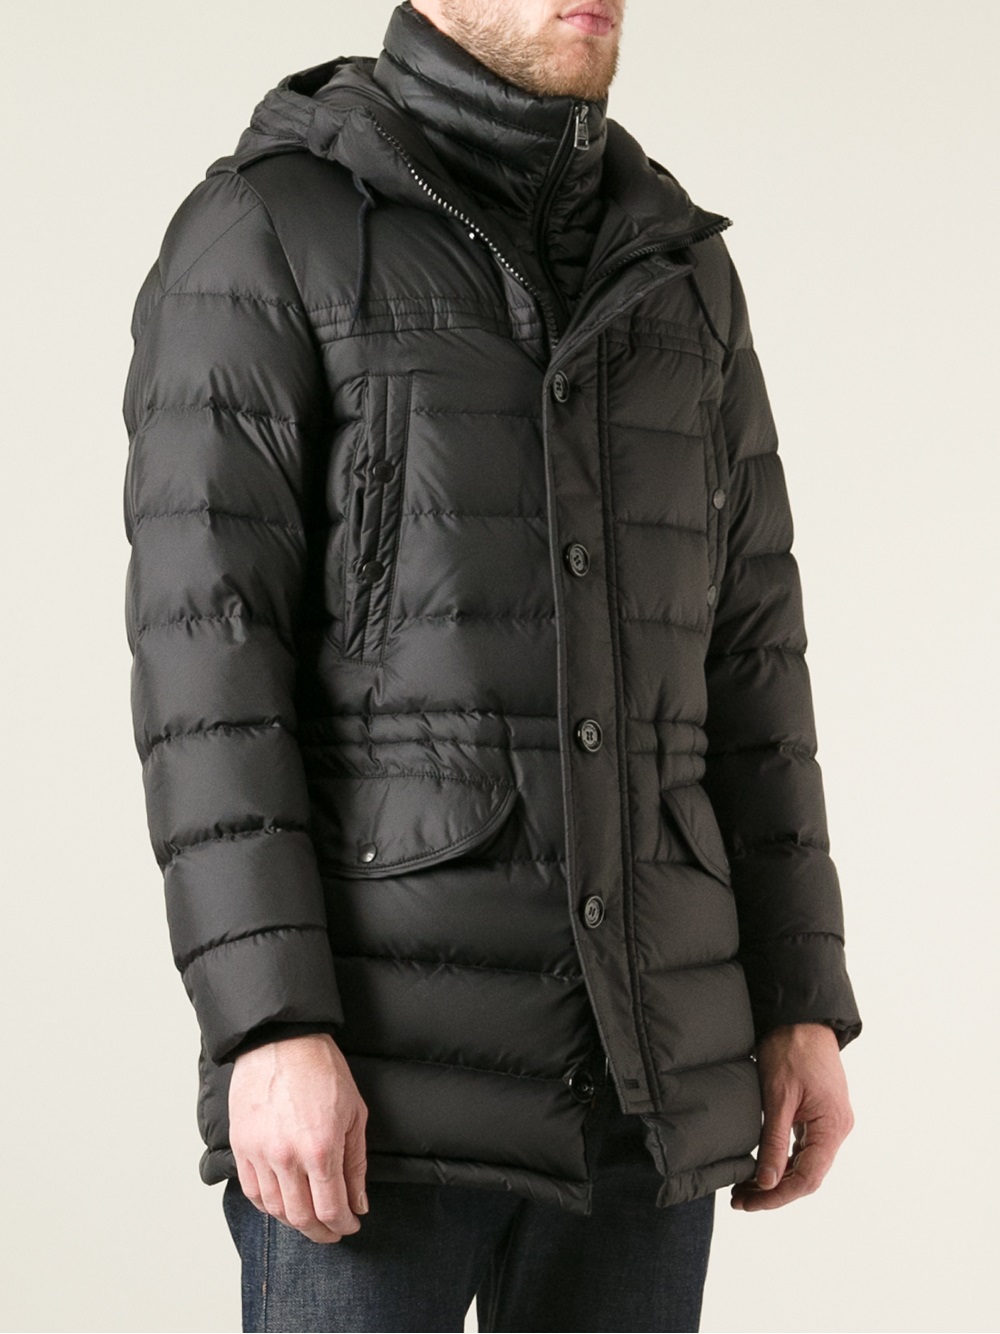 Moncler Rhone Padded Jacket in Black for Men - Lyst